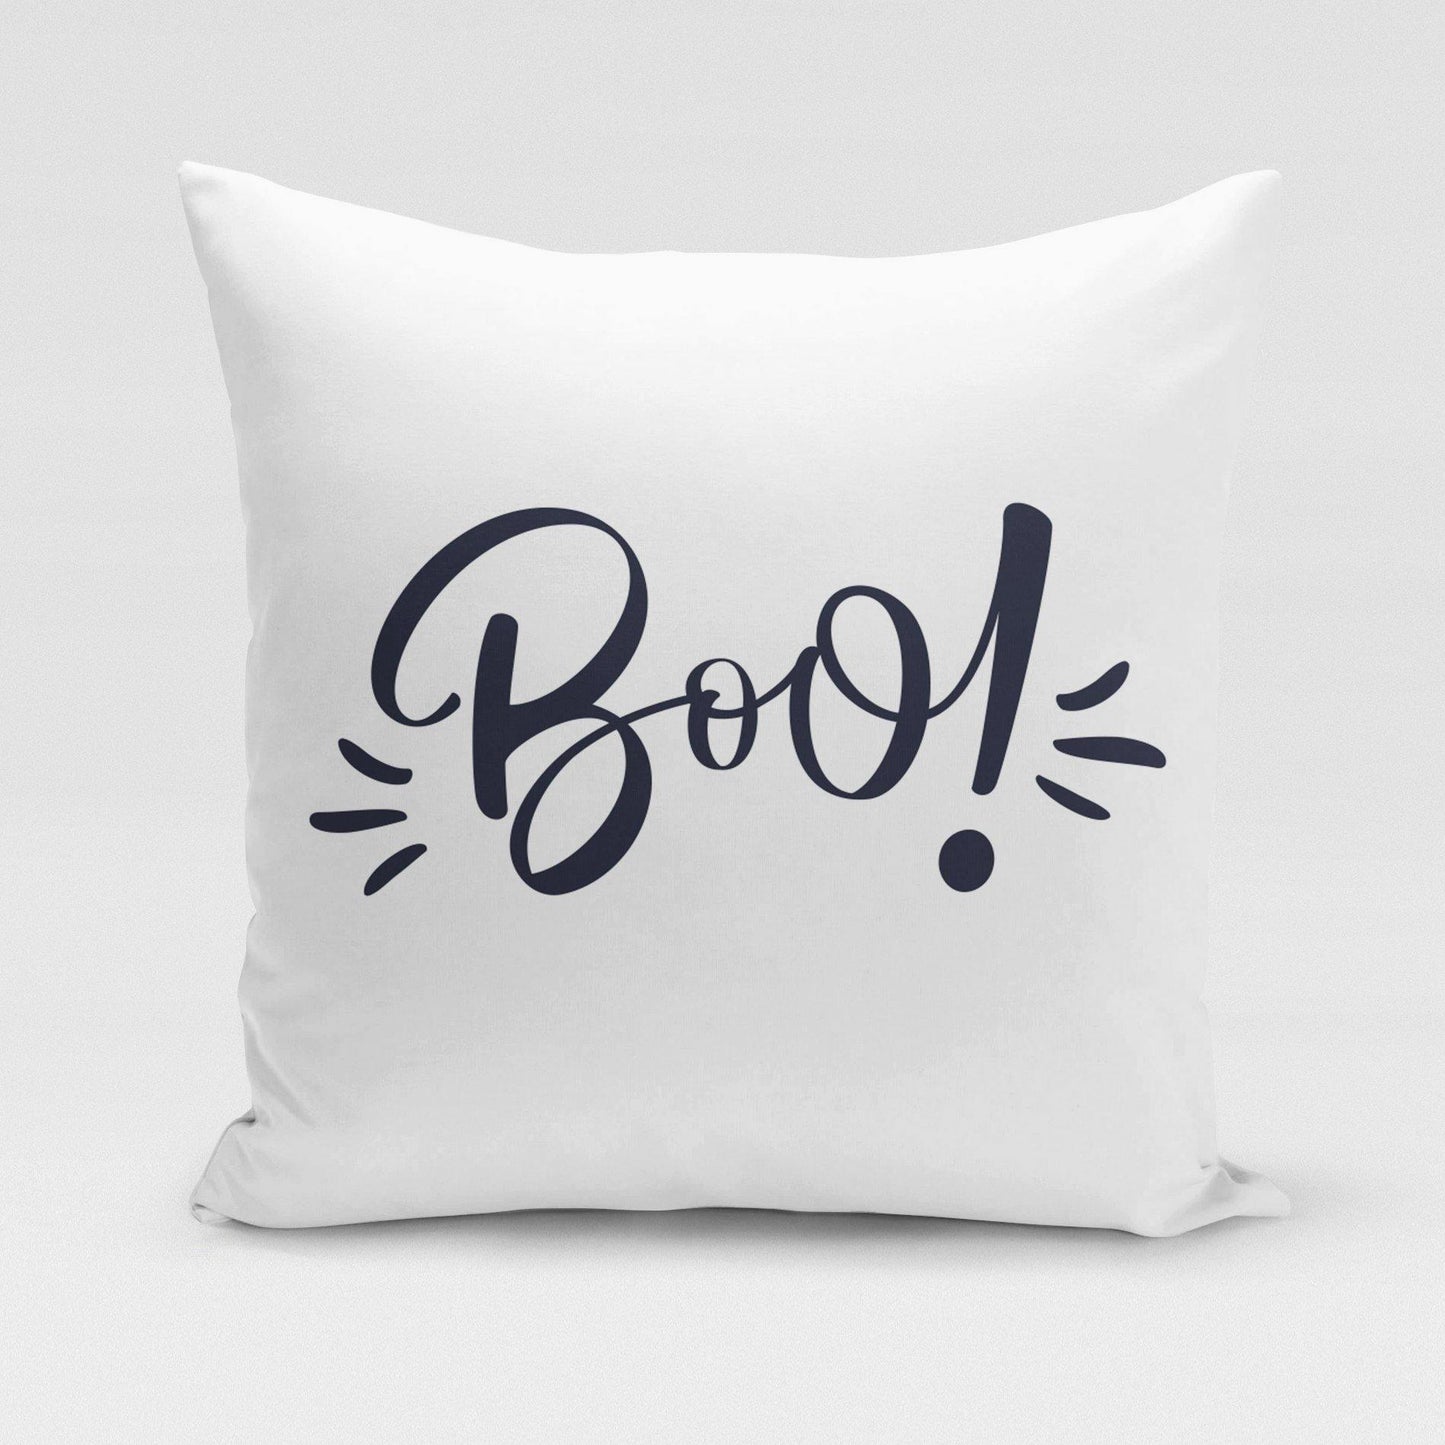 Boo! Pillow Cover